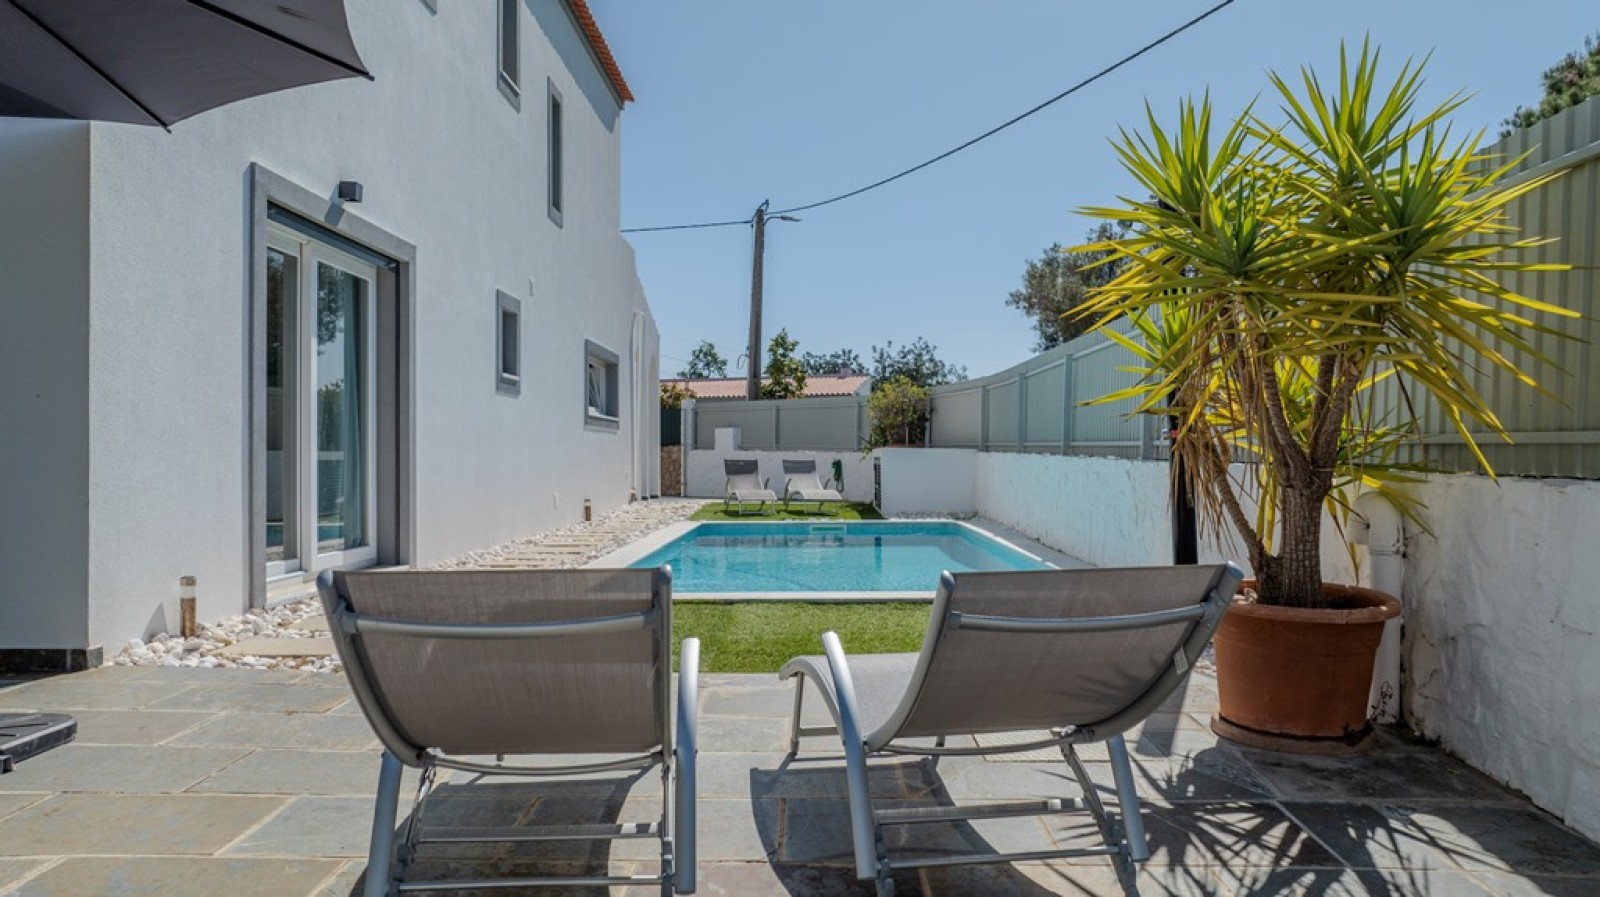 Moradia V4 renovada com piscina, para venda em Vilamoura, Algarve_268749